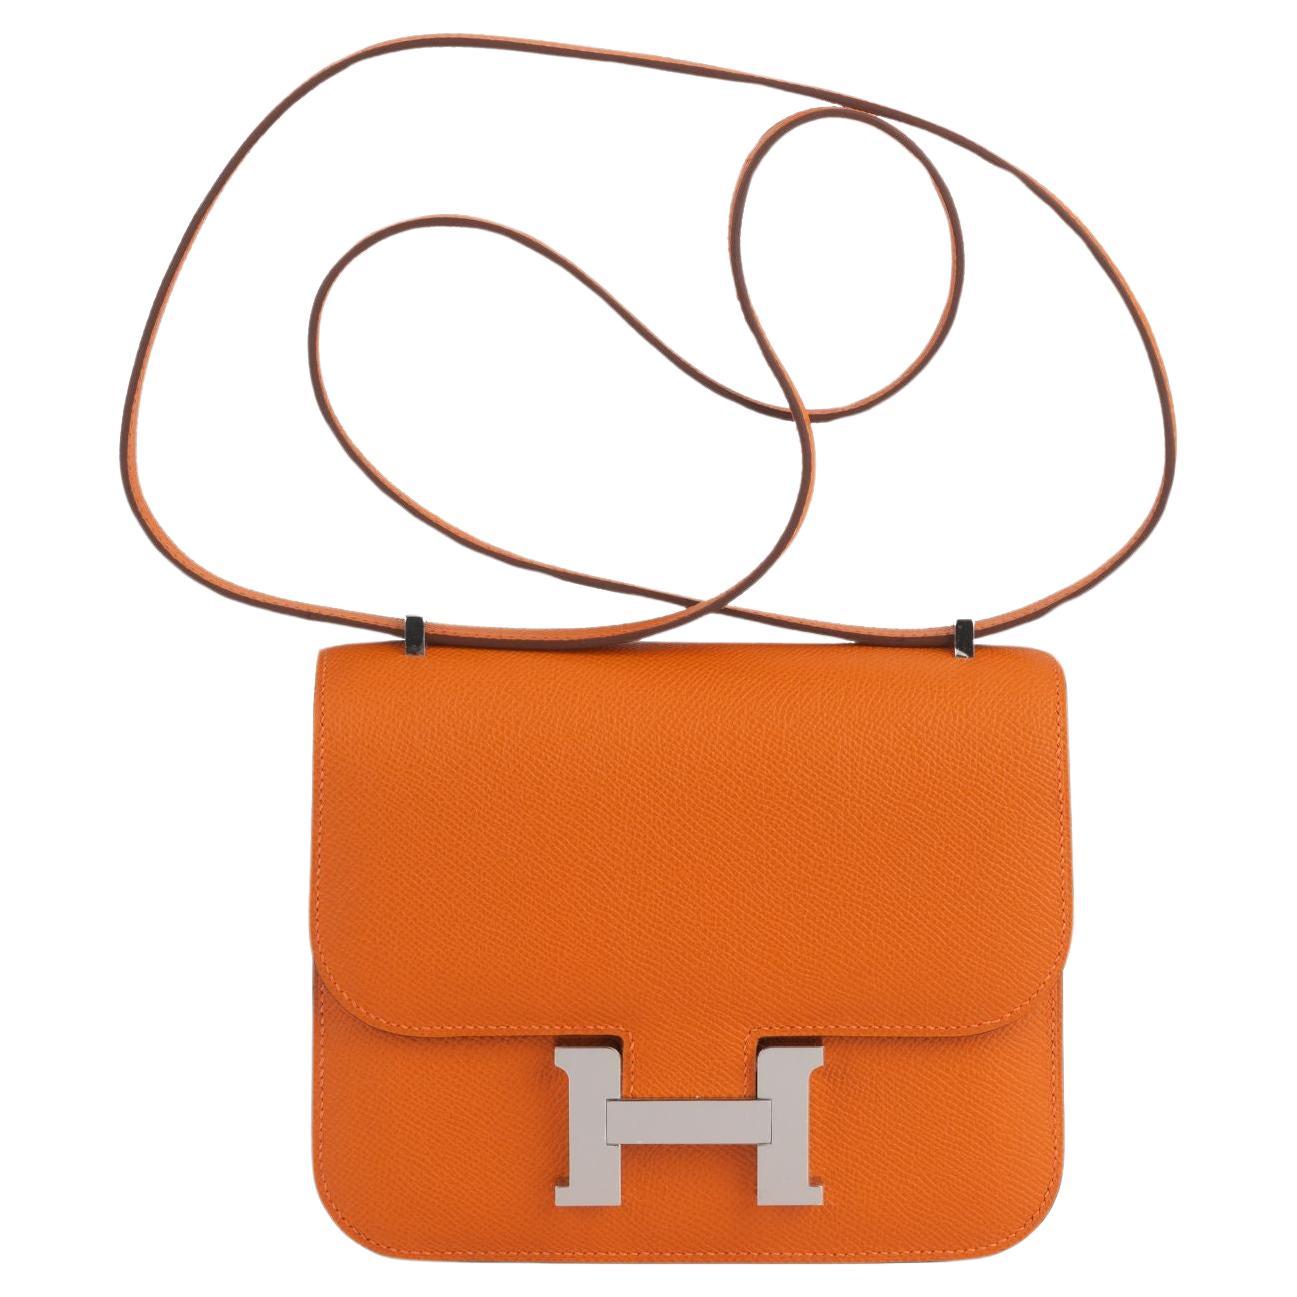 Is the Hermès Constance strap adjustable?